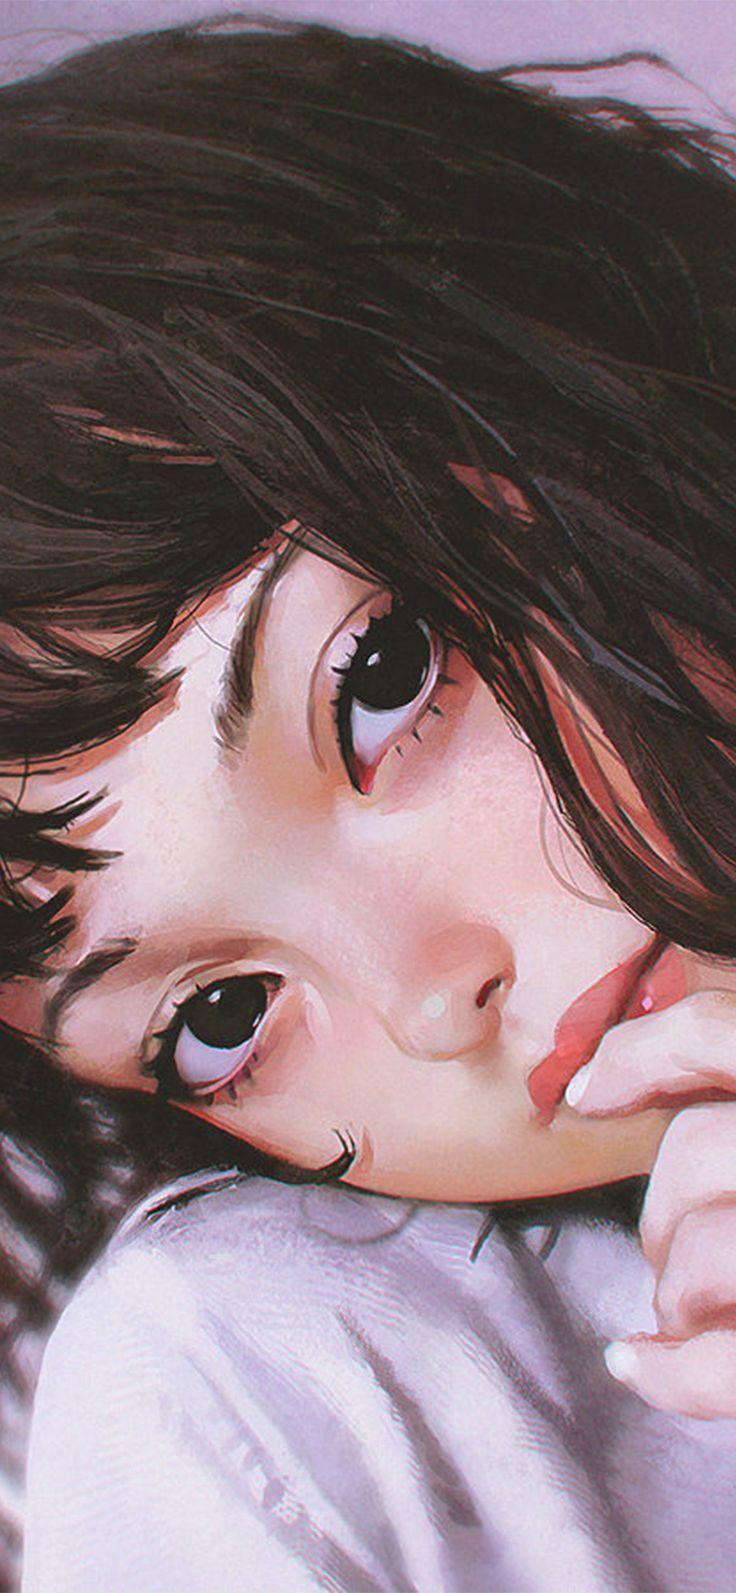 iPhone X Wallpaper, ilya face anime girl art via iPhoneXpapers